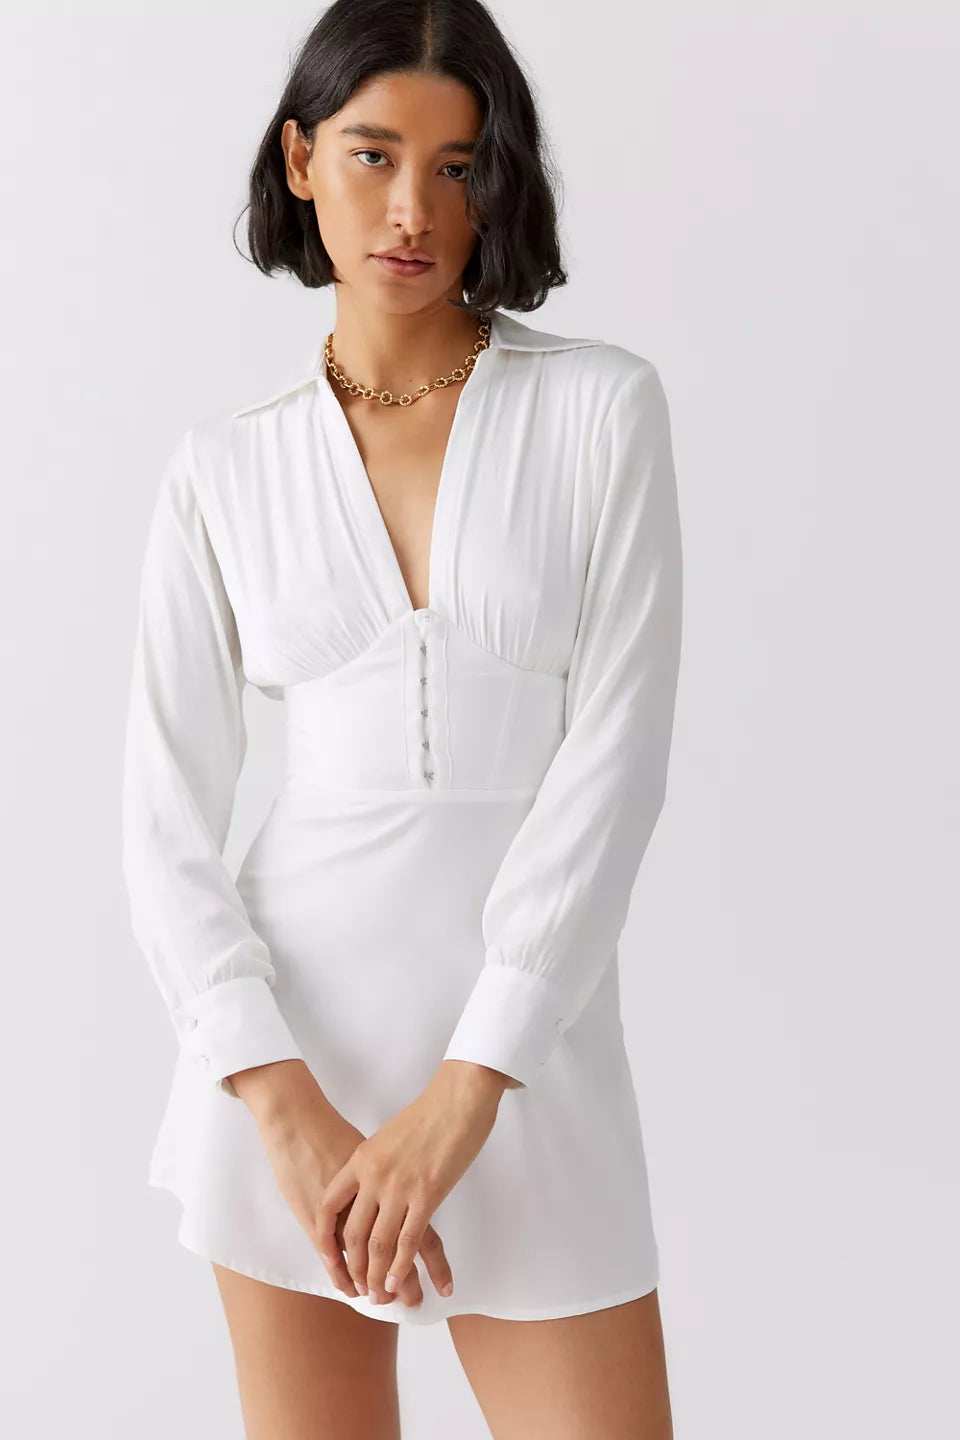 Shirt Dress White for women - Westo India